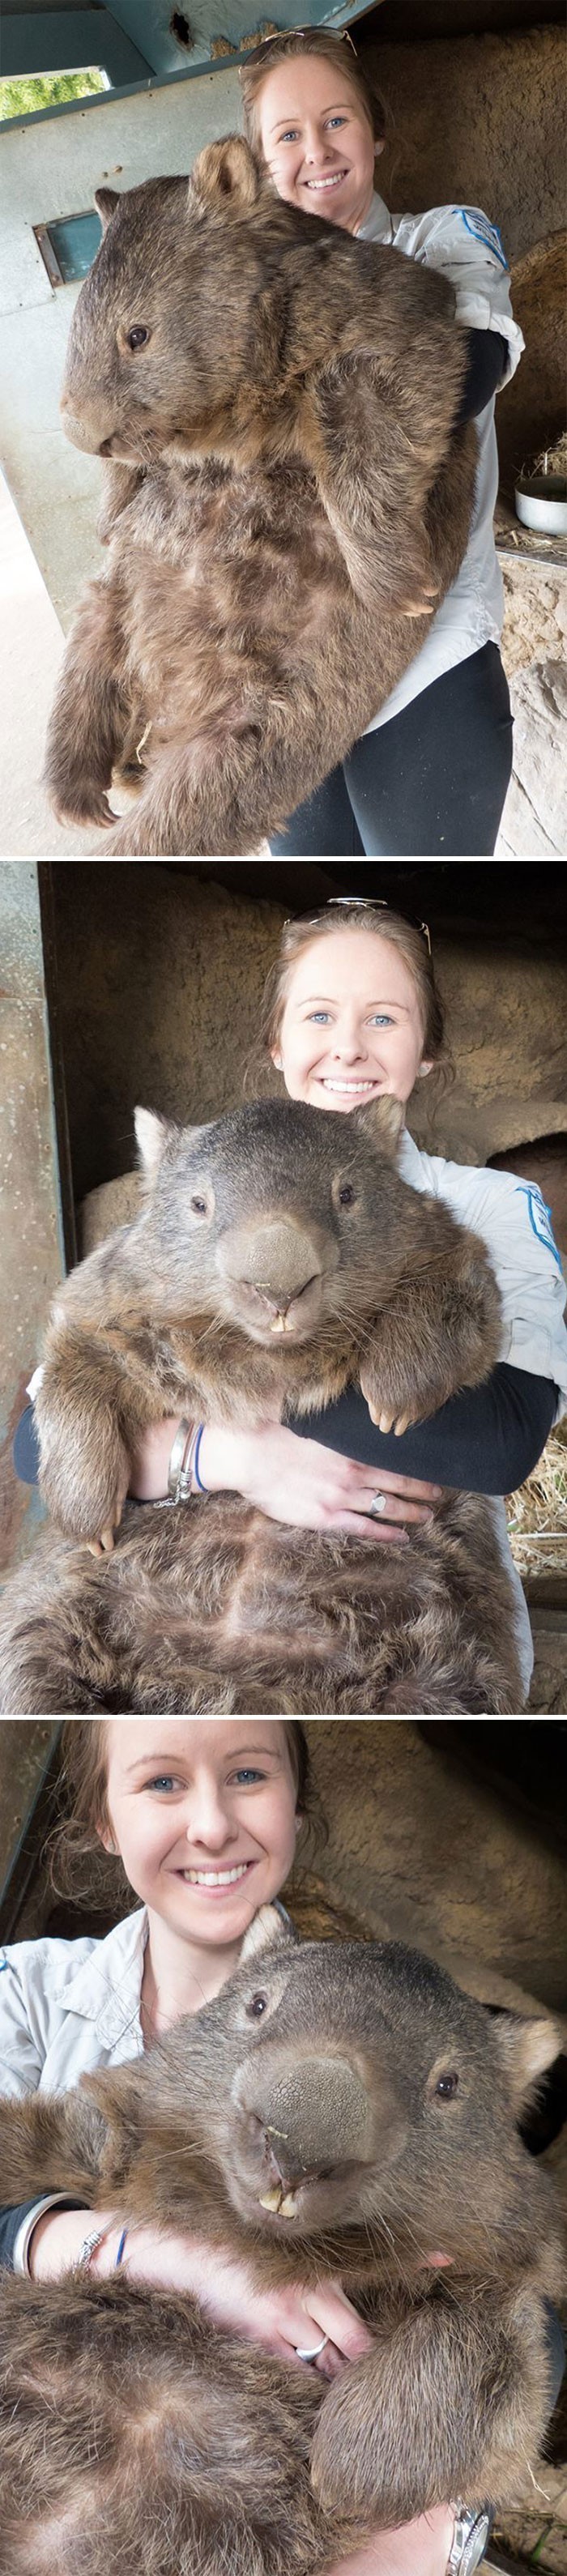 15. Rozmiar tego wombata